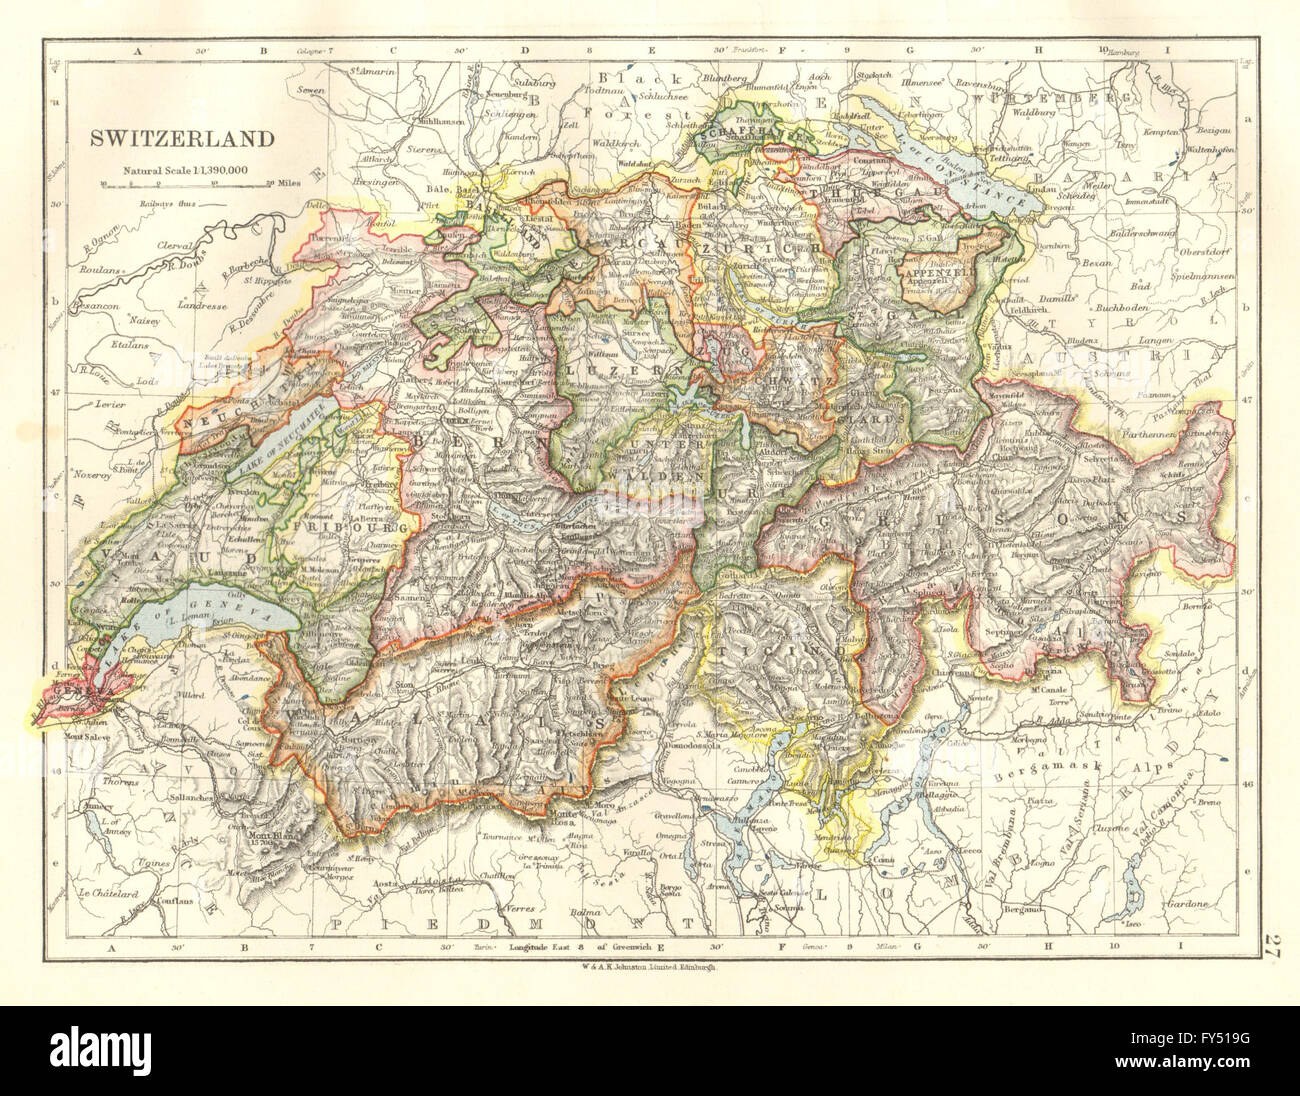 SWITZERLAND. Shows cantons & railways. Alps. Italian lakes. JOHNSTON, 1920 map Stock Photo